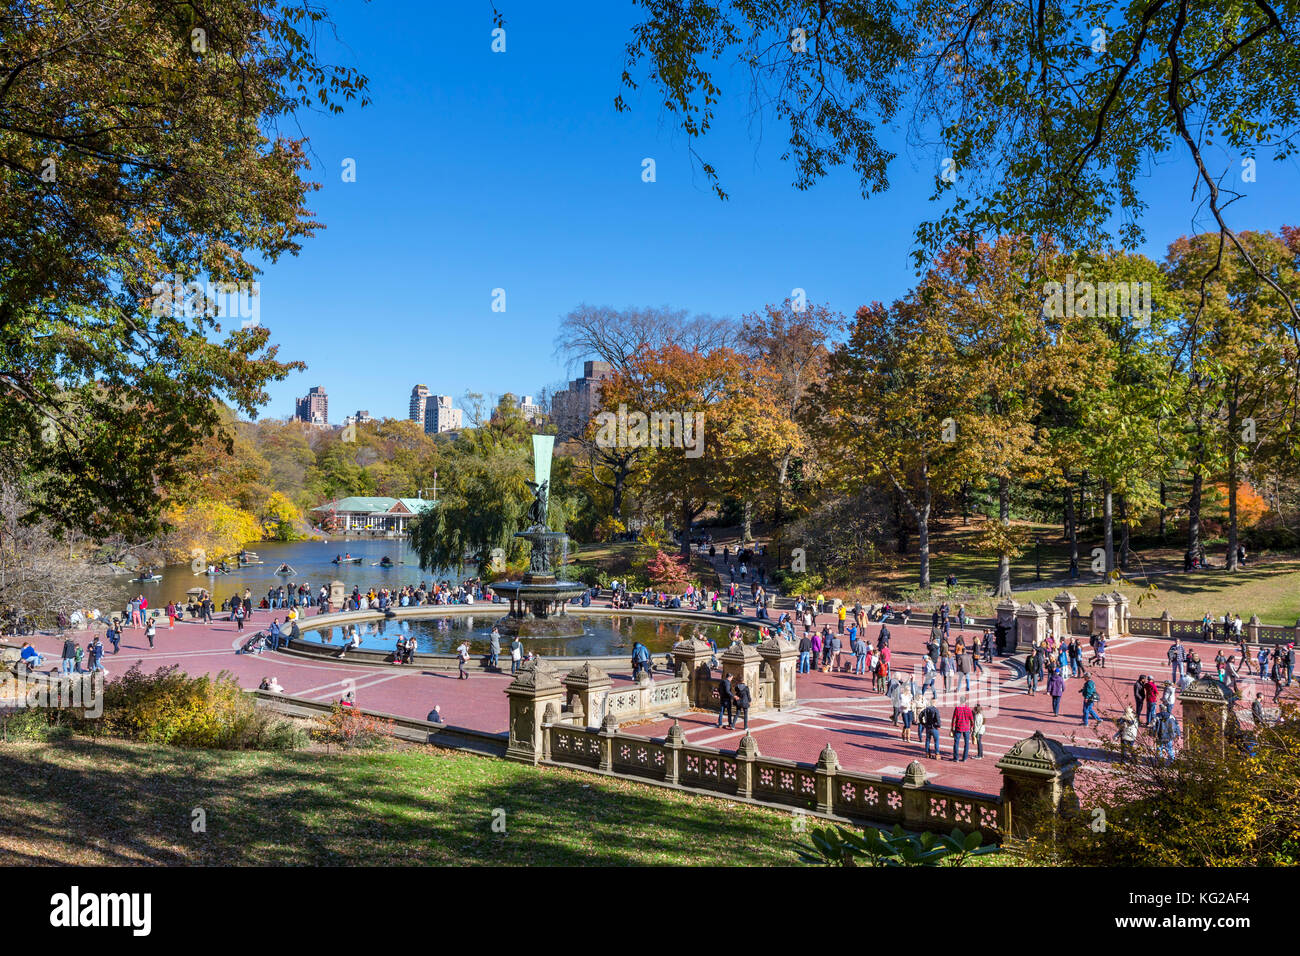 Bethesda Fountain, Central Park, New York City, NY, EE.UU. Foto de stock